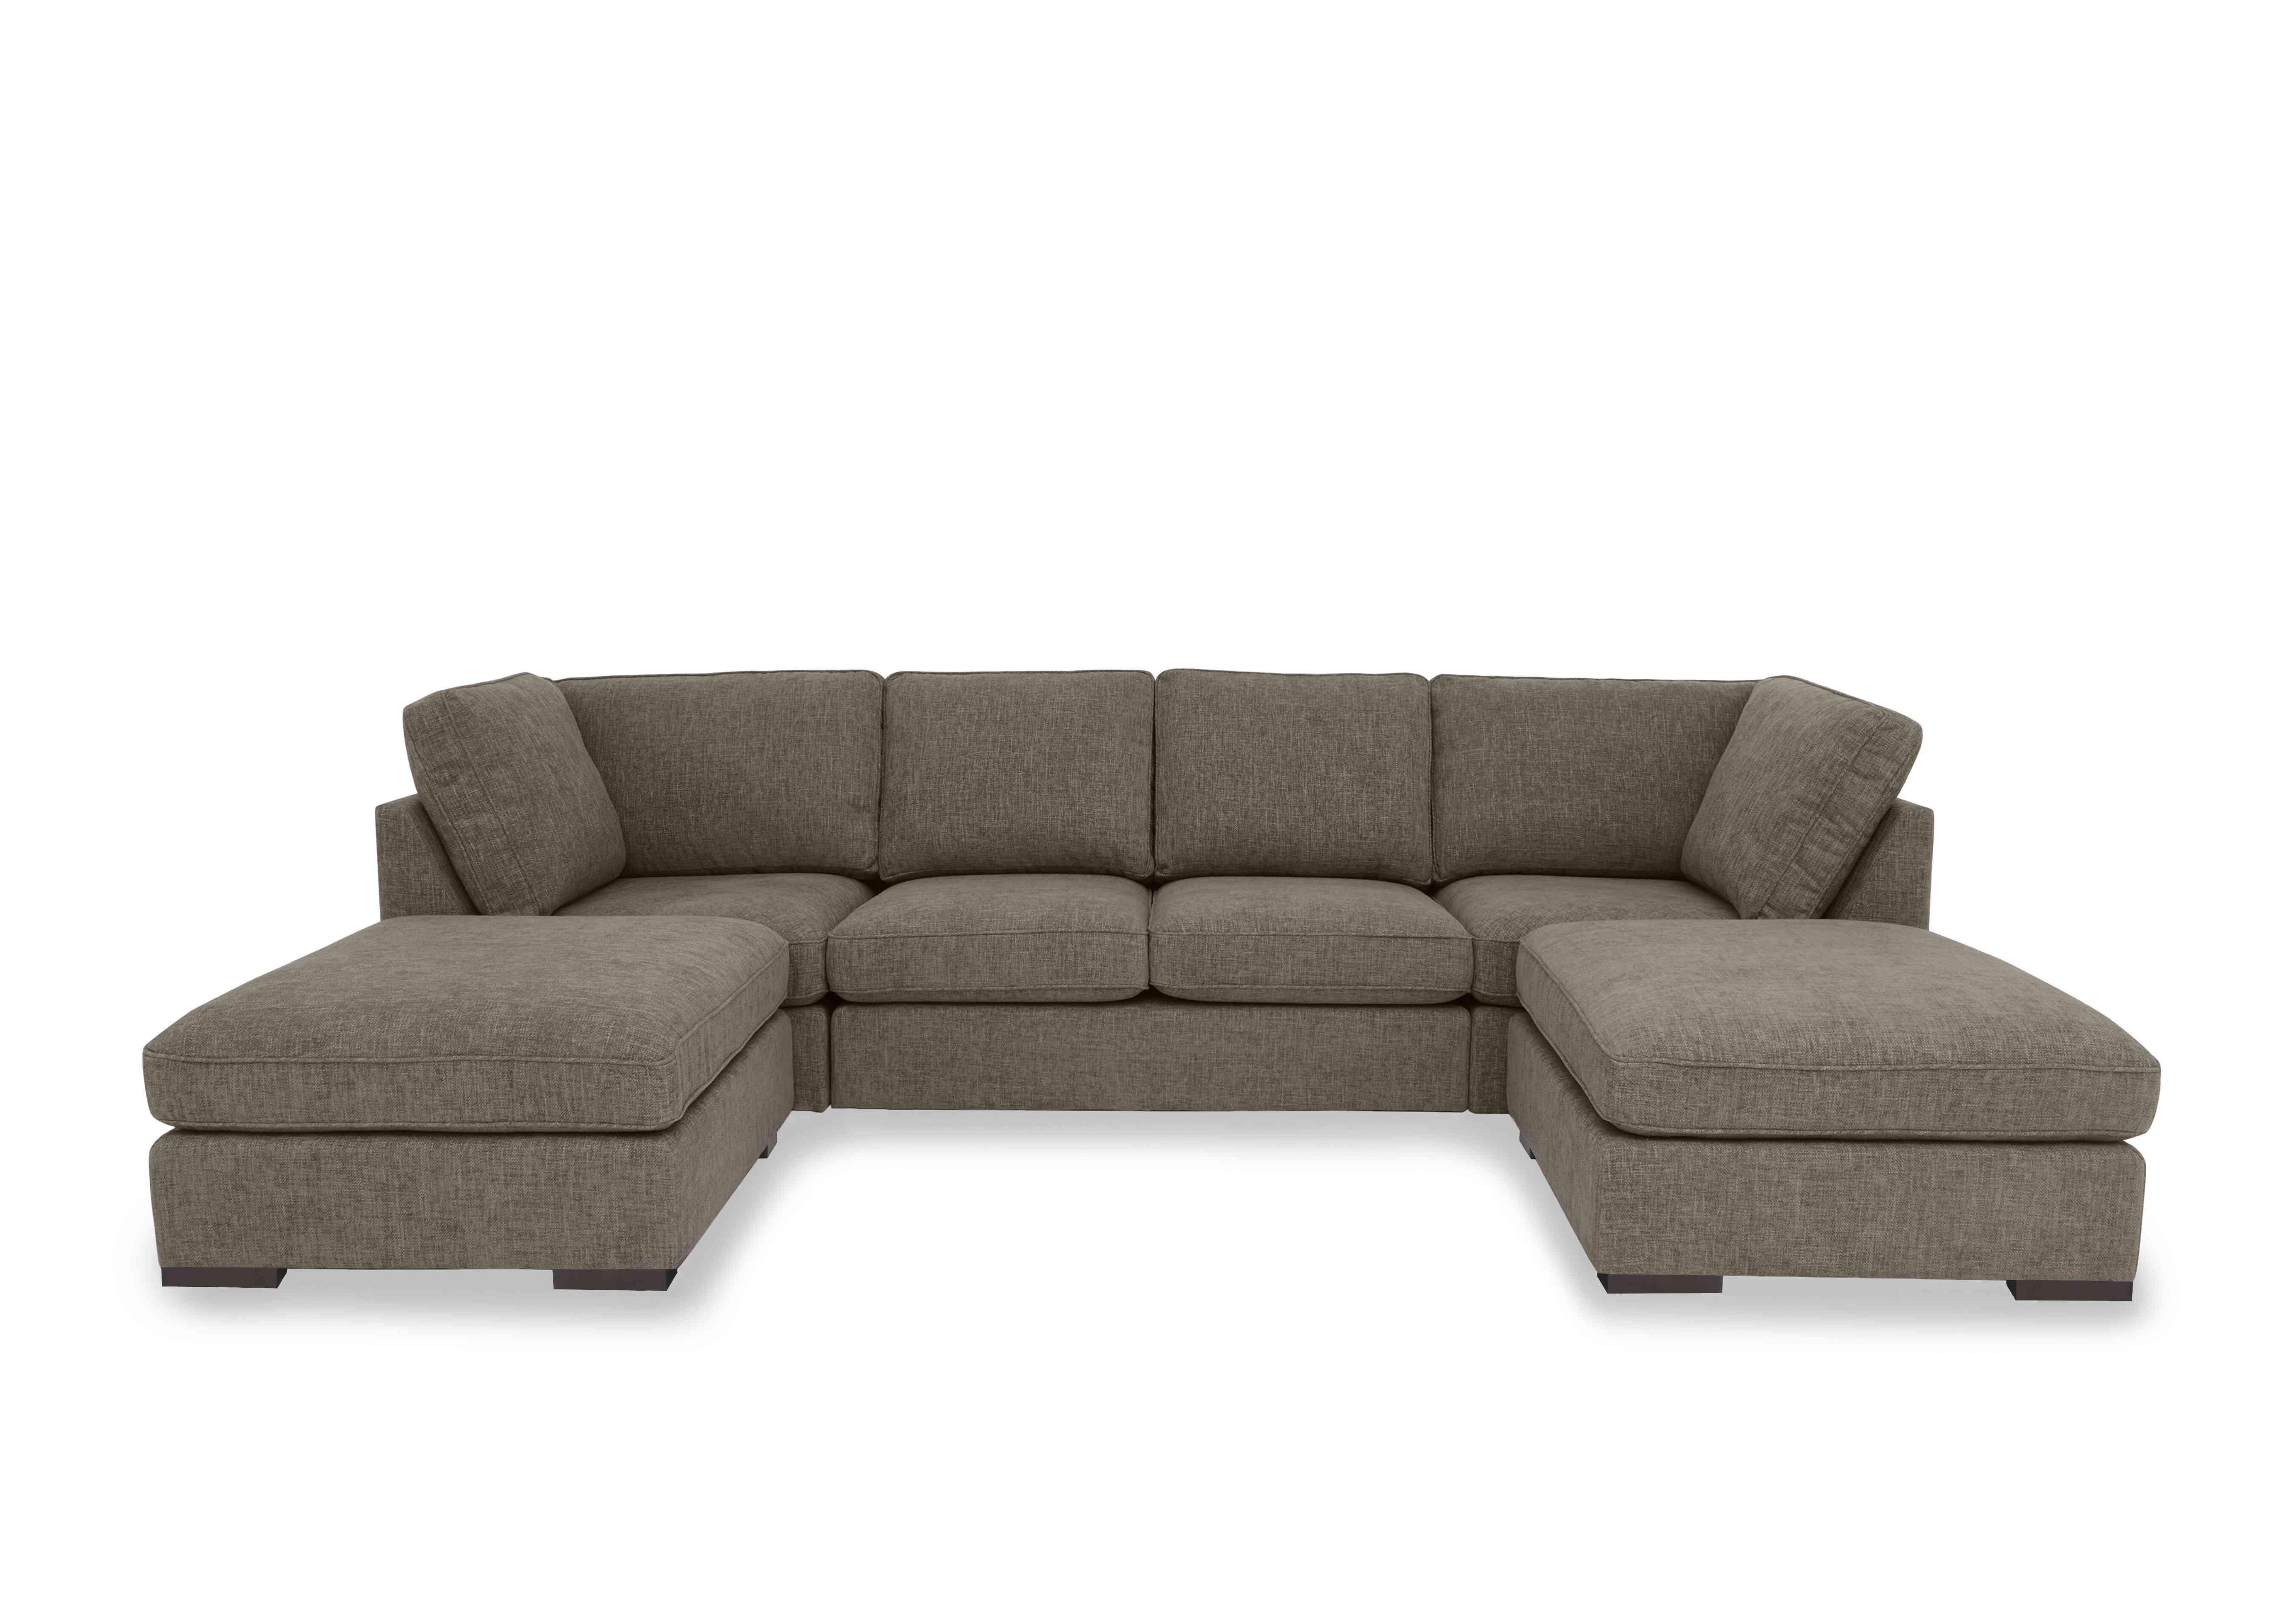 Ugo Large U-Shaped Corner Sofa in Anivia Brown 15445 on Furniture Village